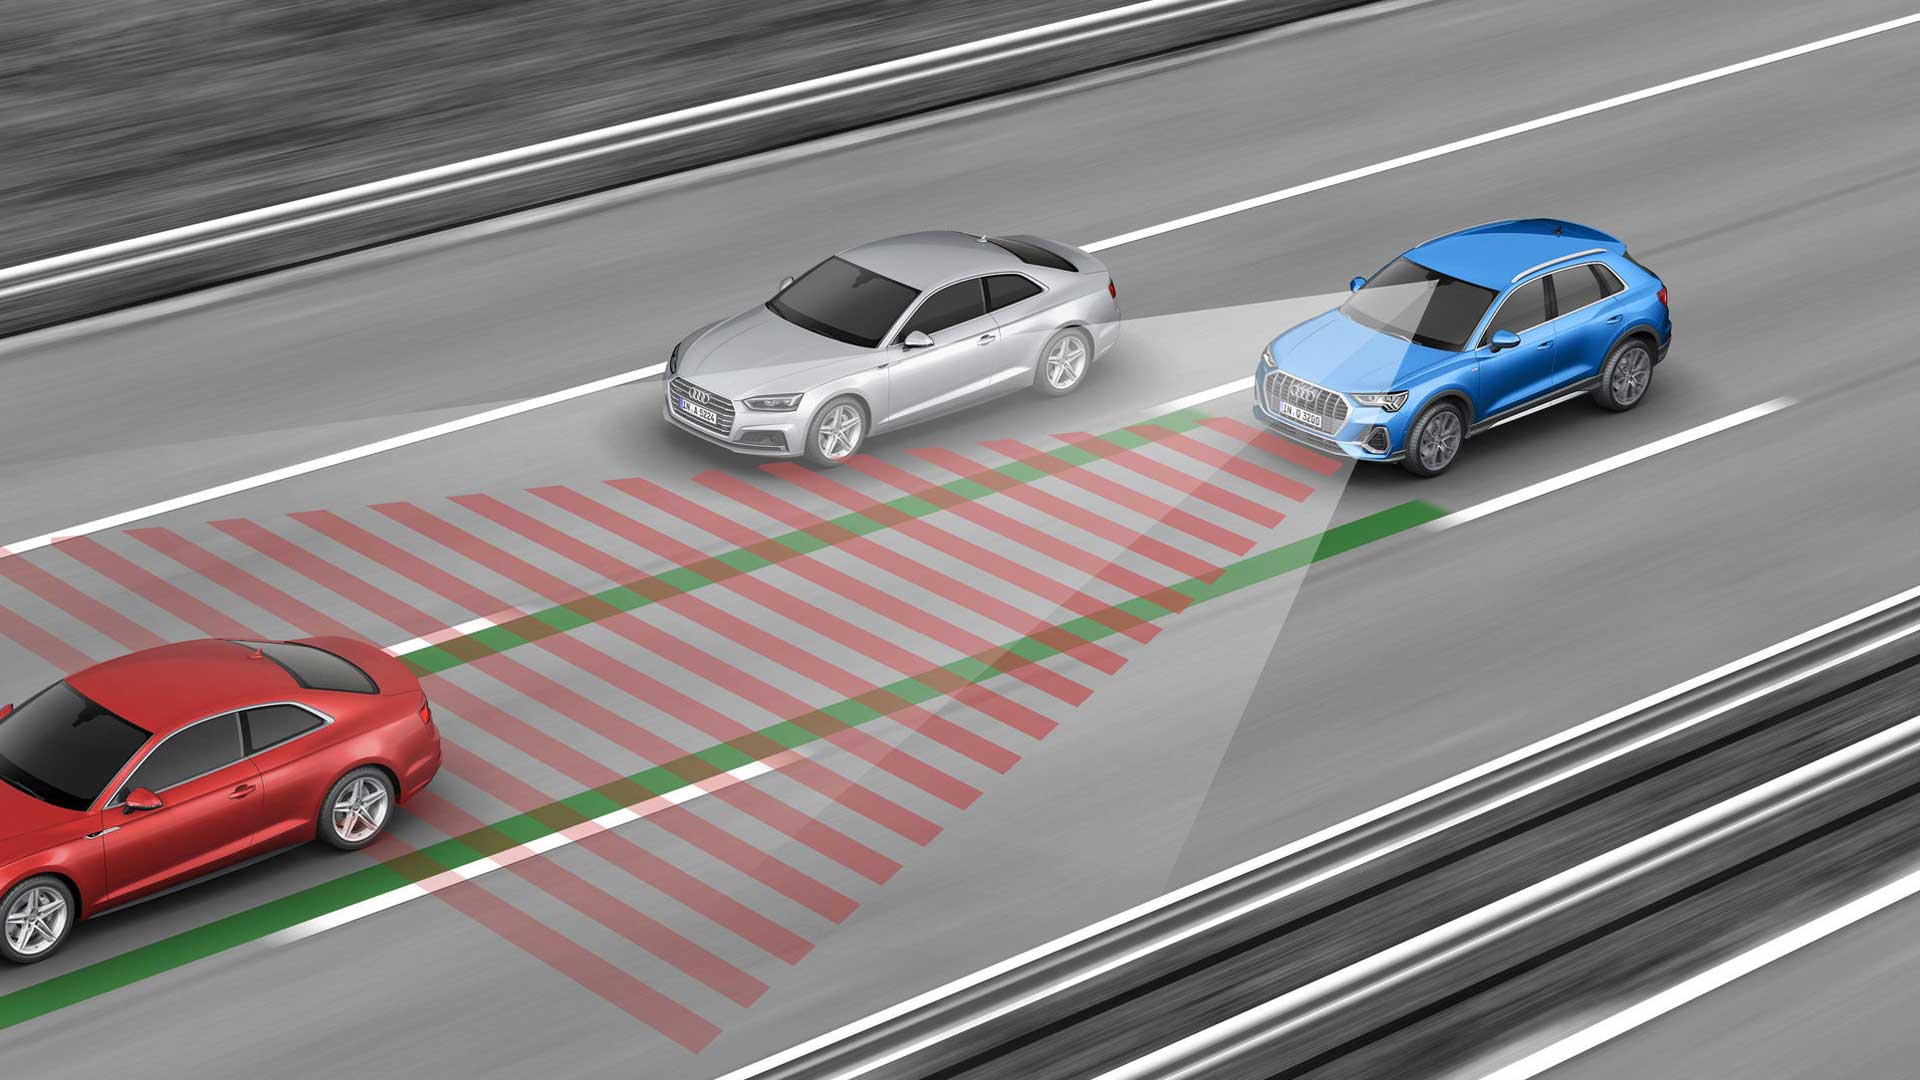 2023 Audi Q3 Adaptive cruise control with lane guidance